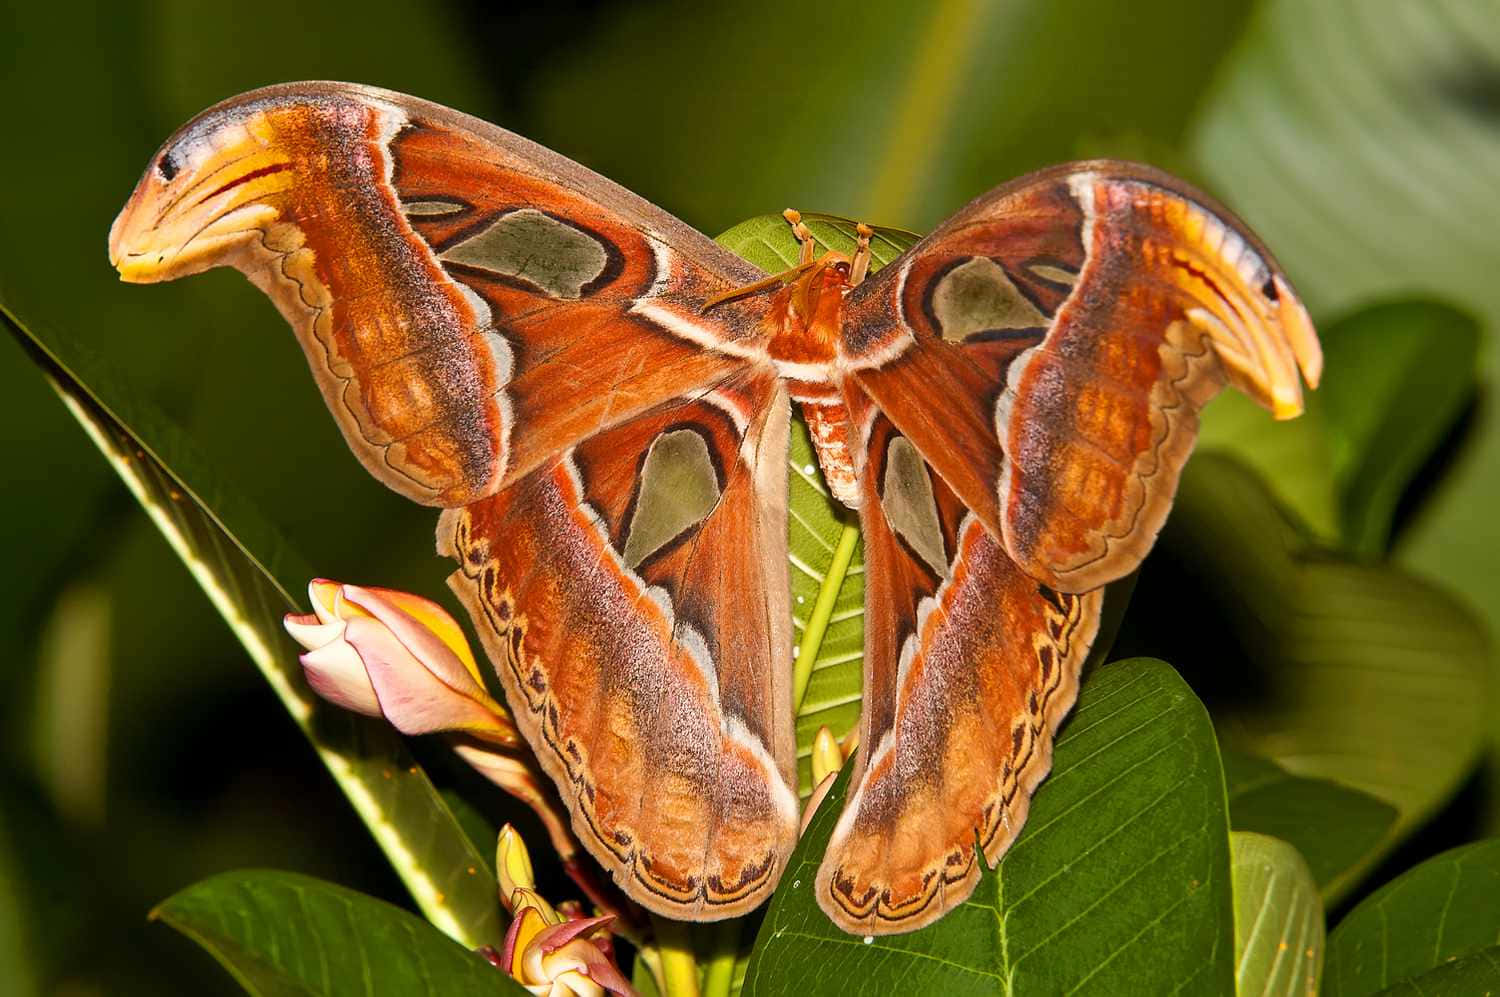 A beautiful moth camouflaged on bark